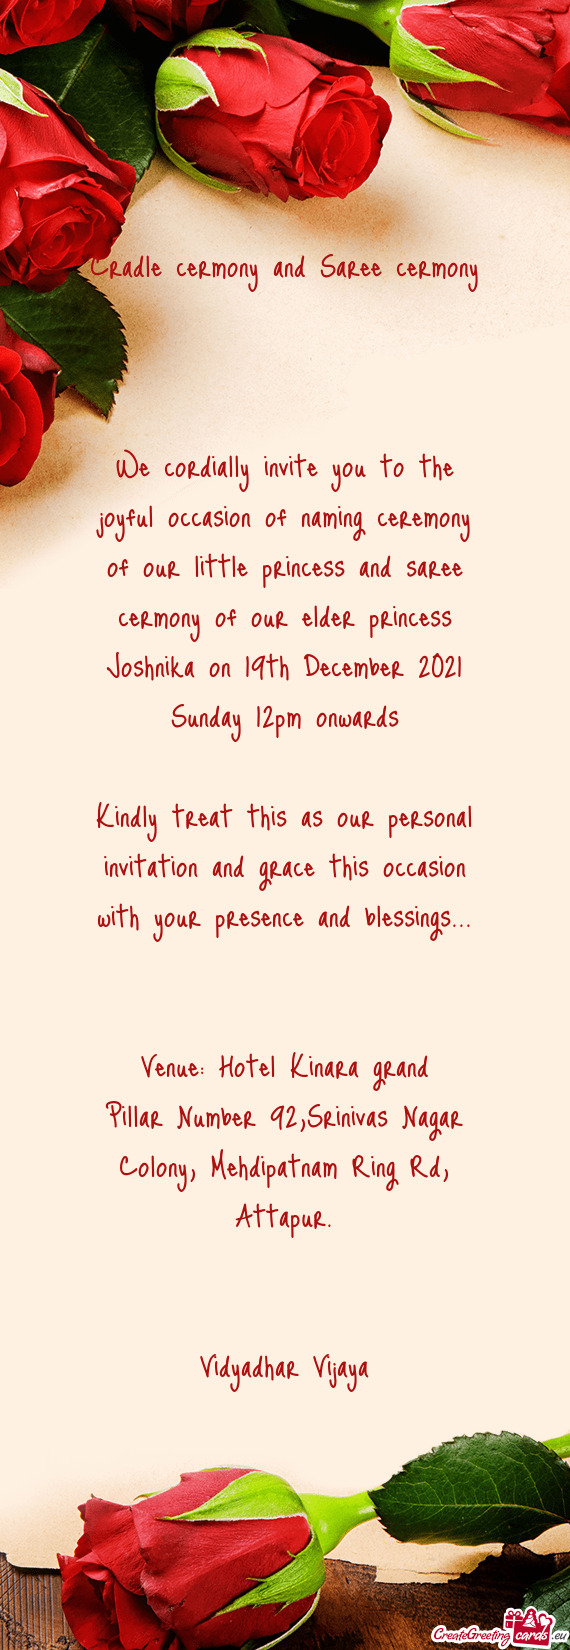 Ermony of our elder princess Joshnika on 19th December 2021 Sunday 12pm onwards